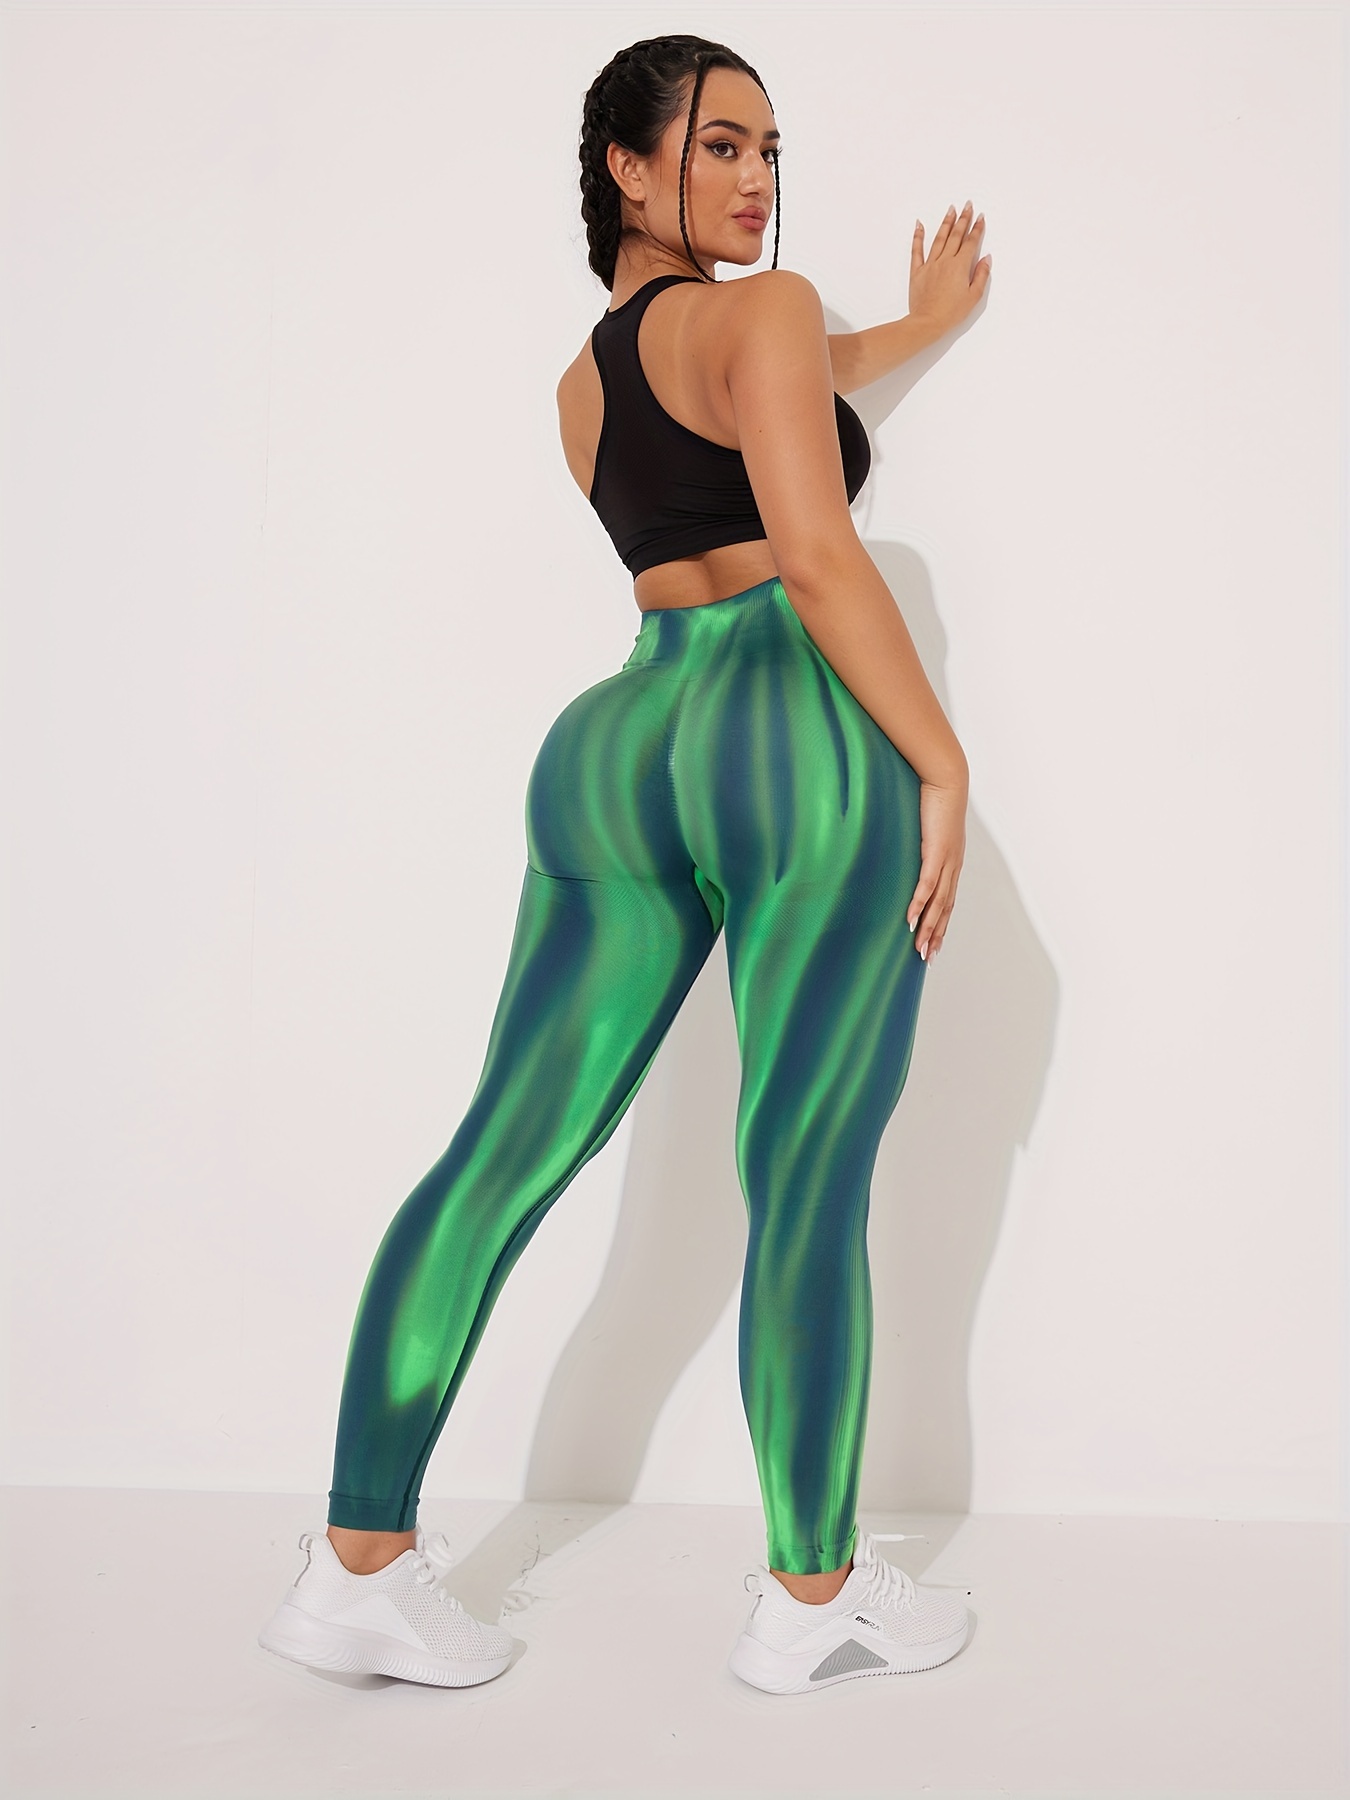  AUROLA Workout Leggings For Women Yoga Butt Lifting Fitness  Legging Seamless Scrunch Tights Pants Tummy Control Gym Sport